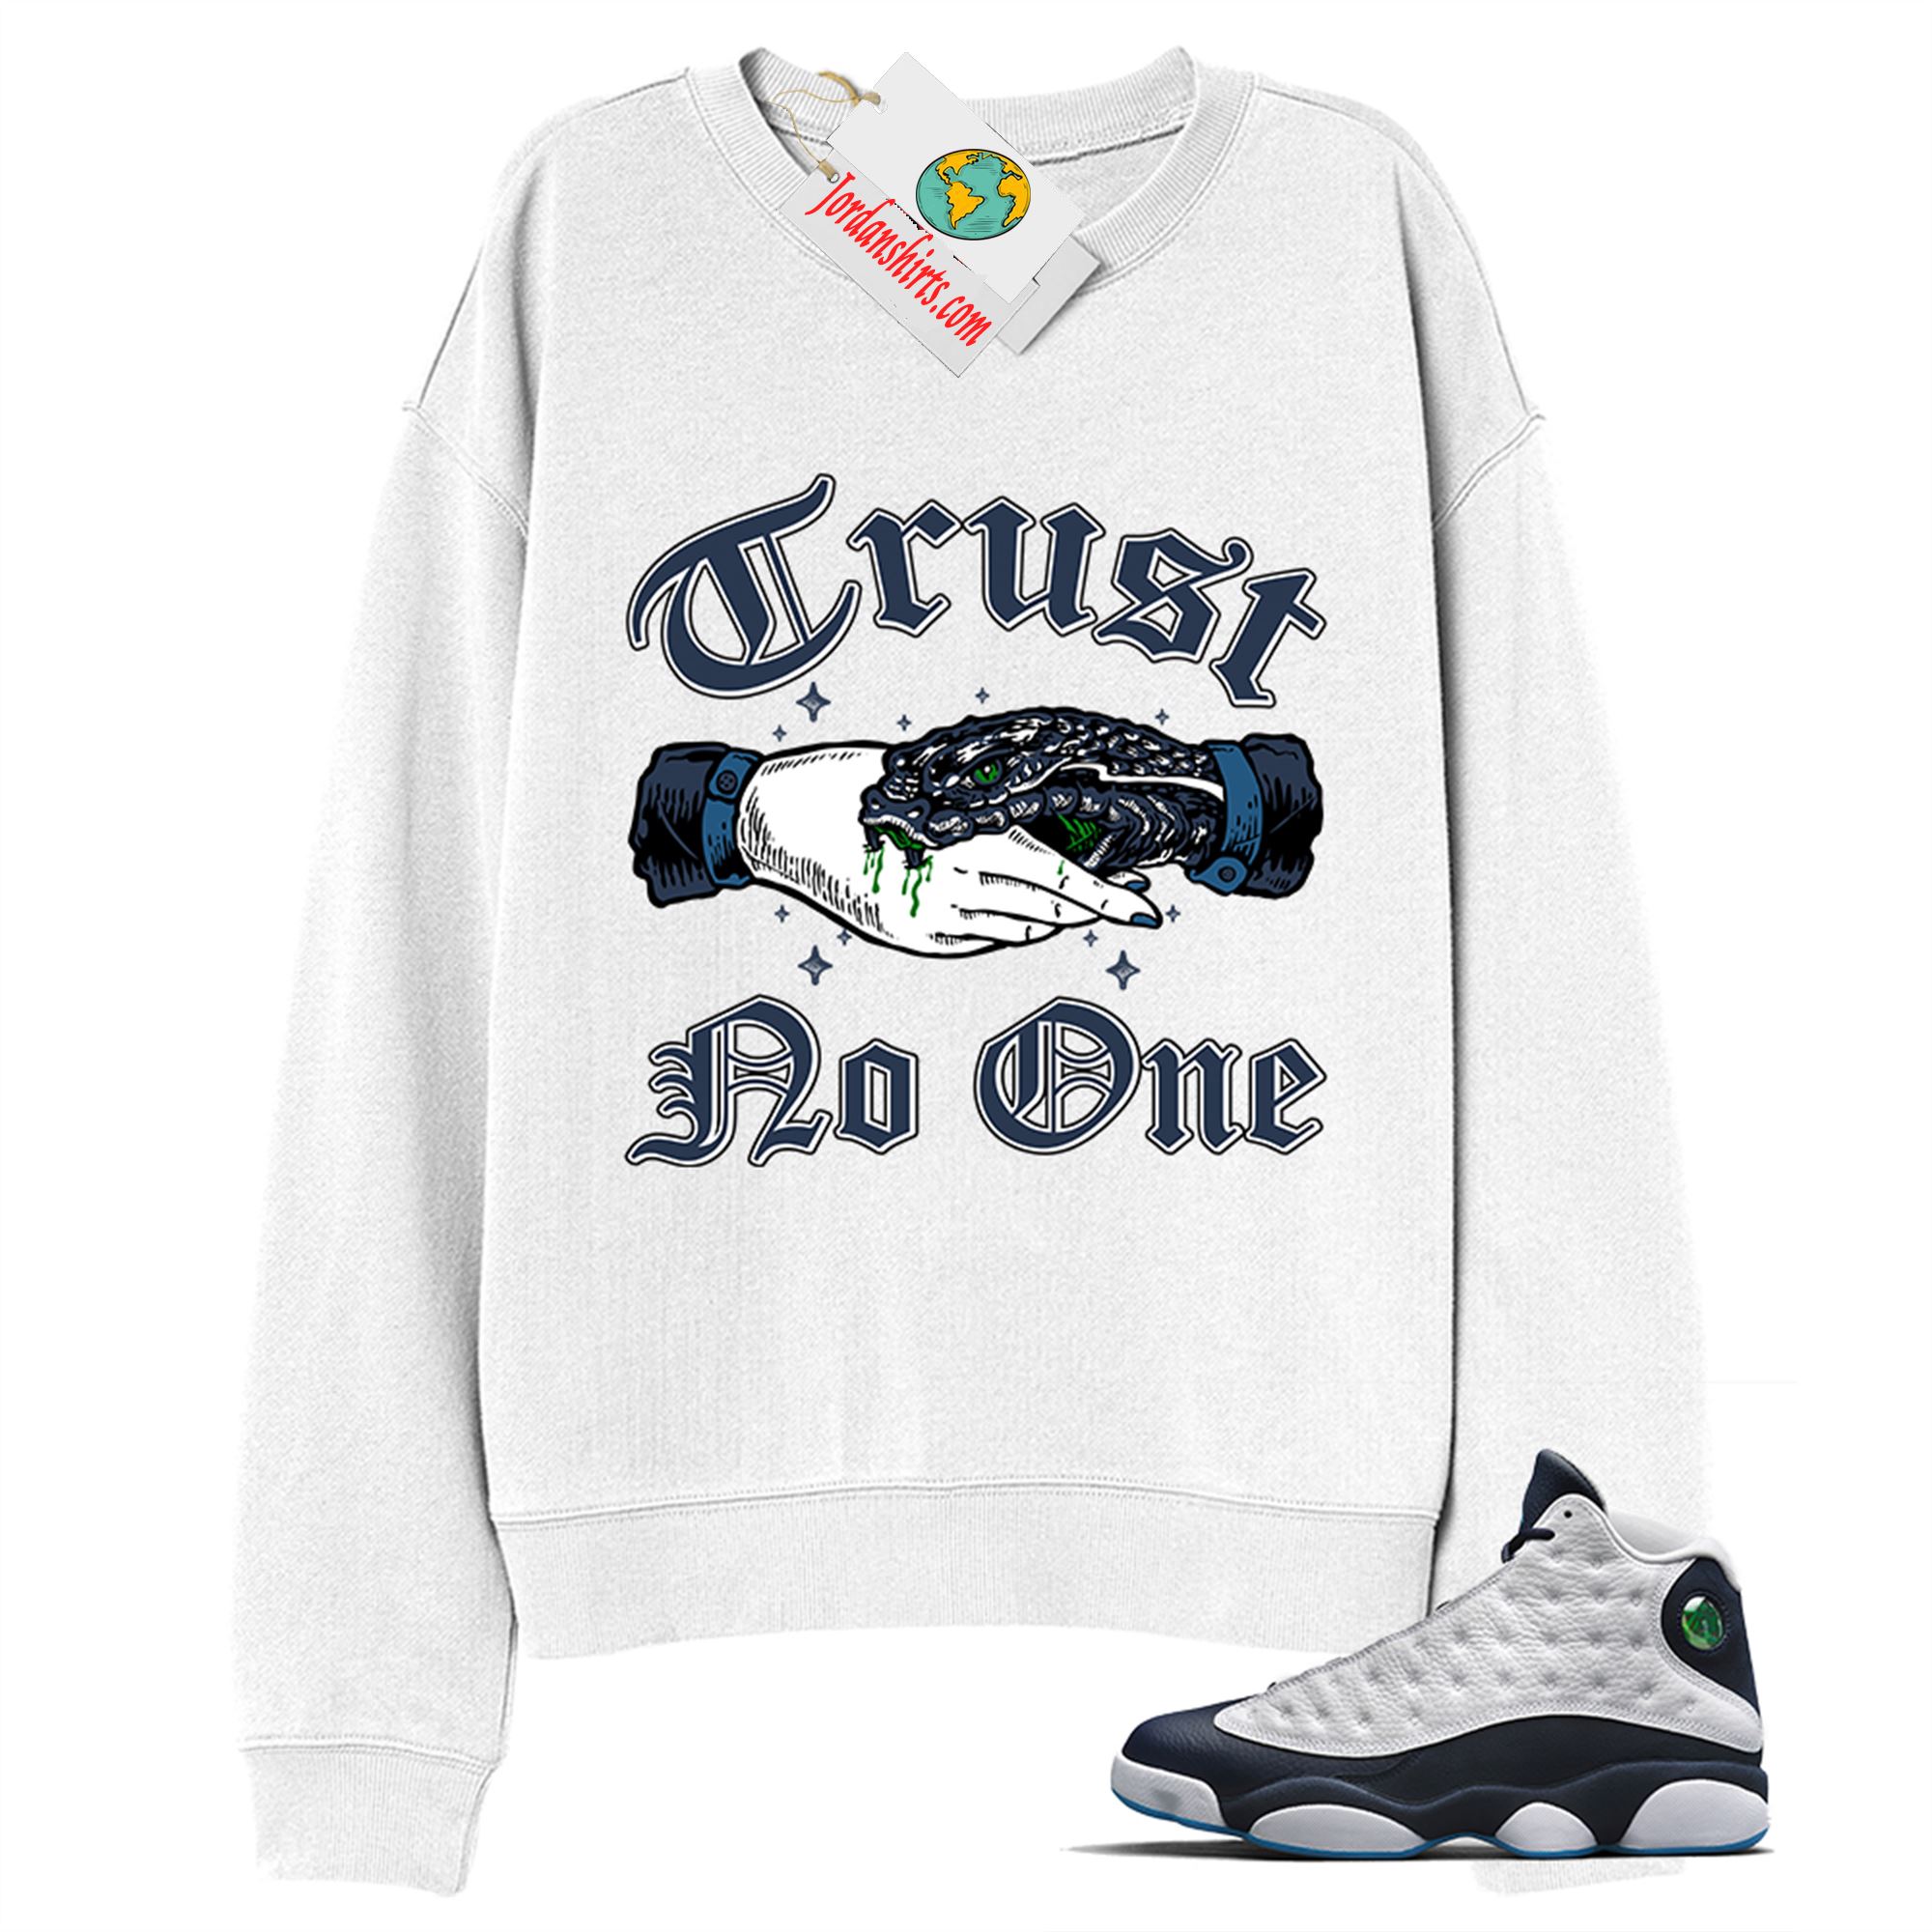 Jordan 13 Sweatshirt, Trust No One Deal With Snake White Sweatshirt Air Jordan 13 Obsidian 13s Full Size Up To 5xl